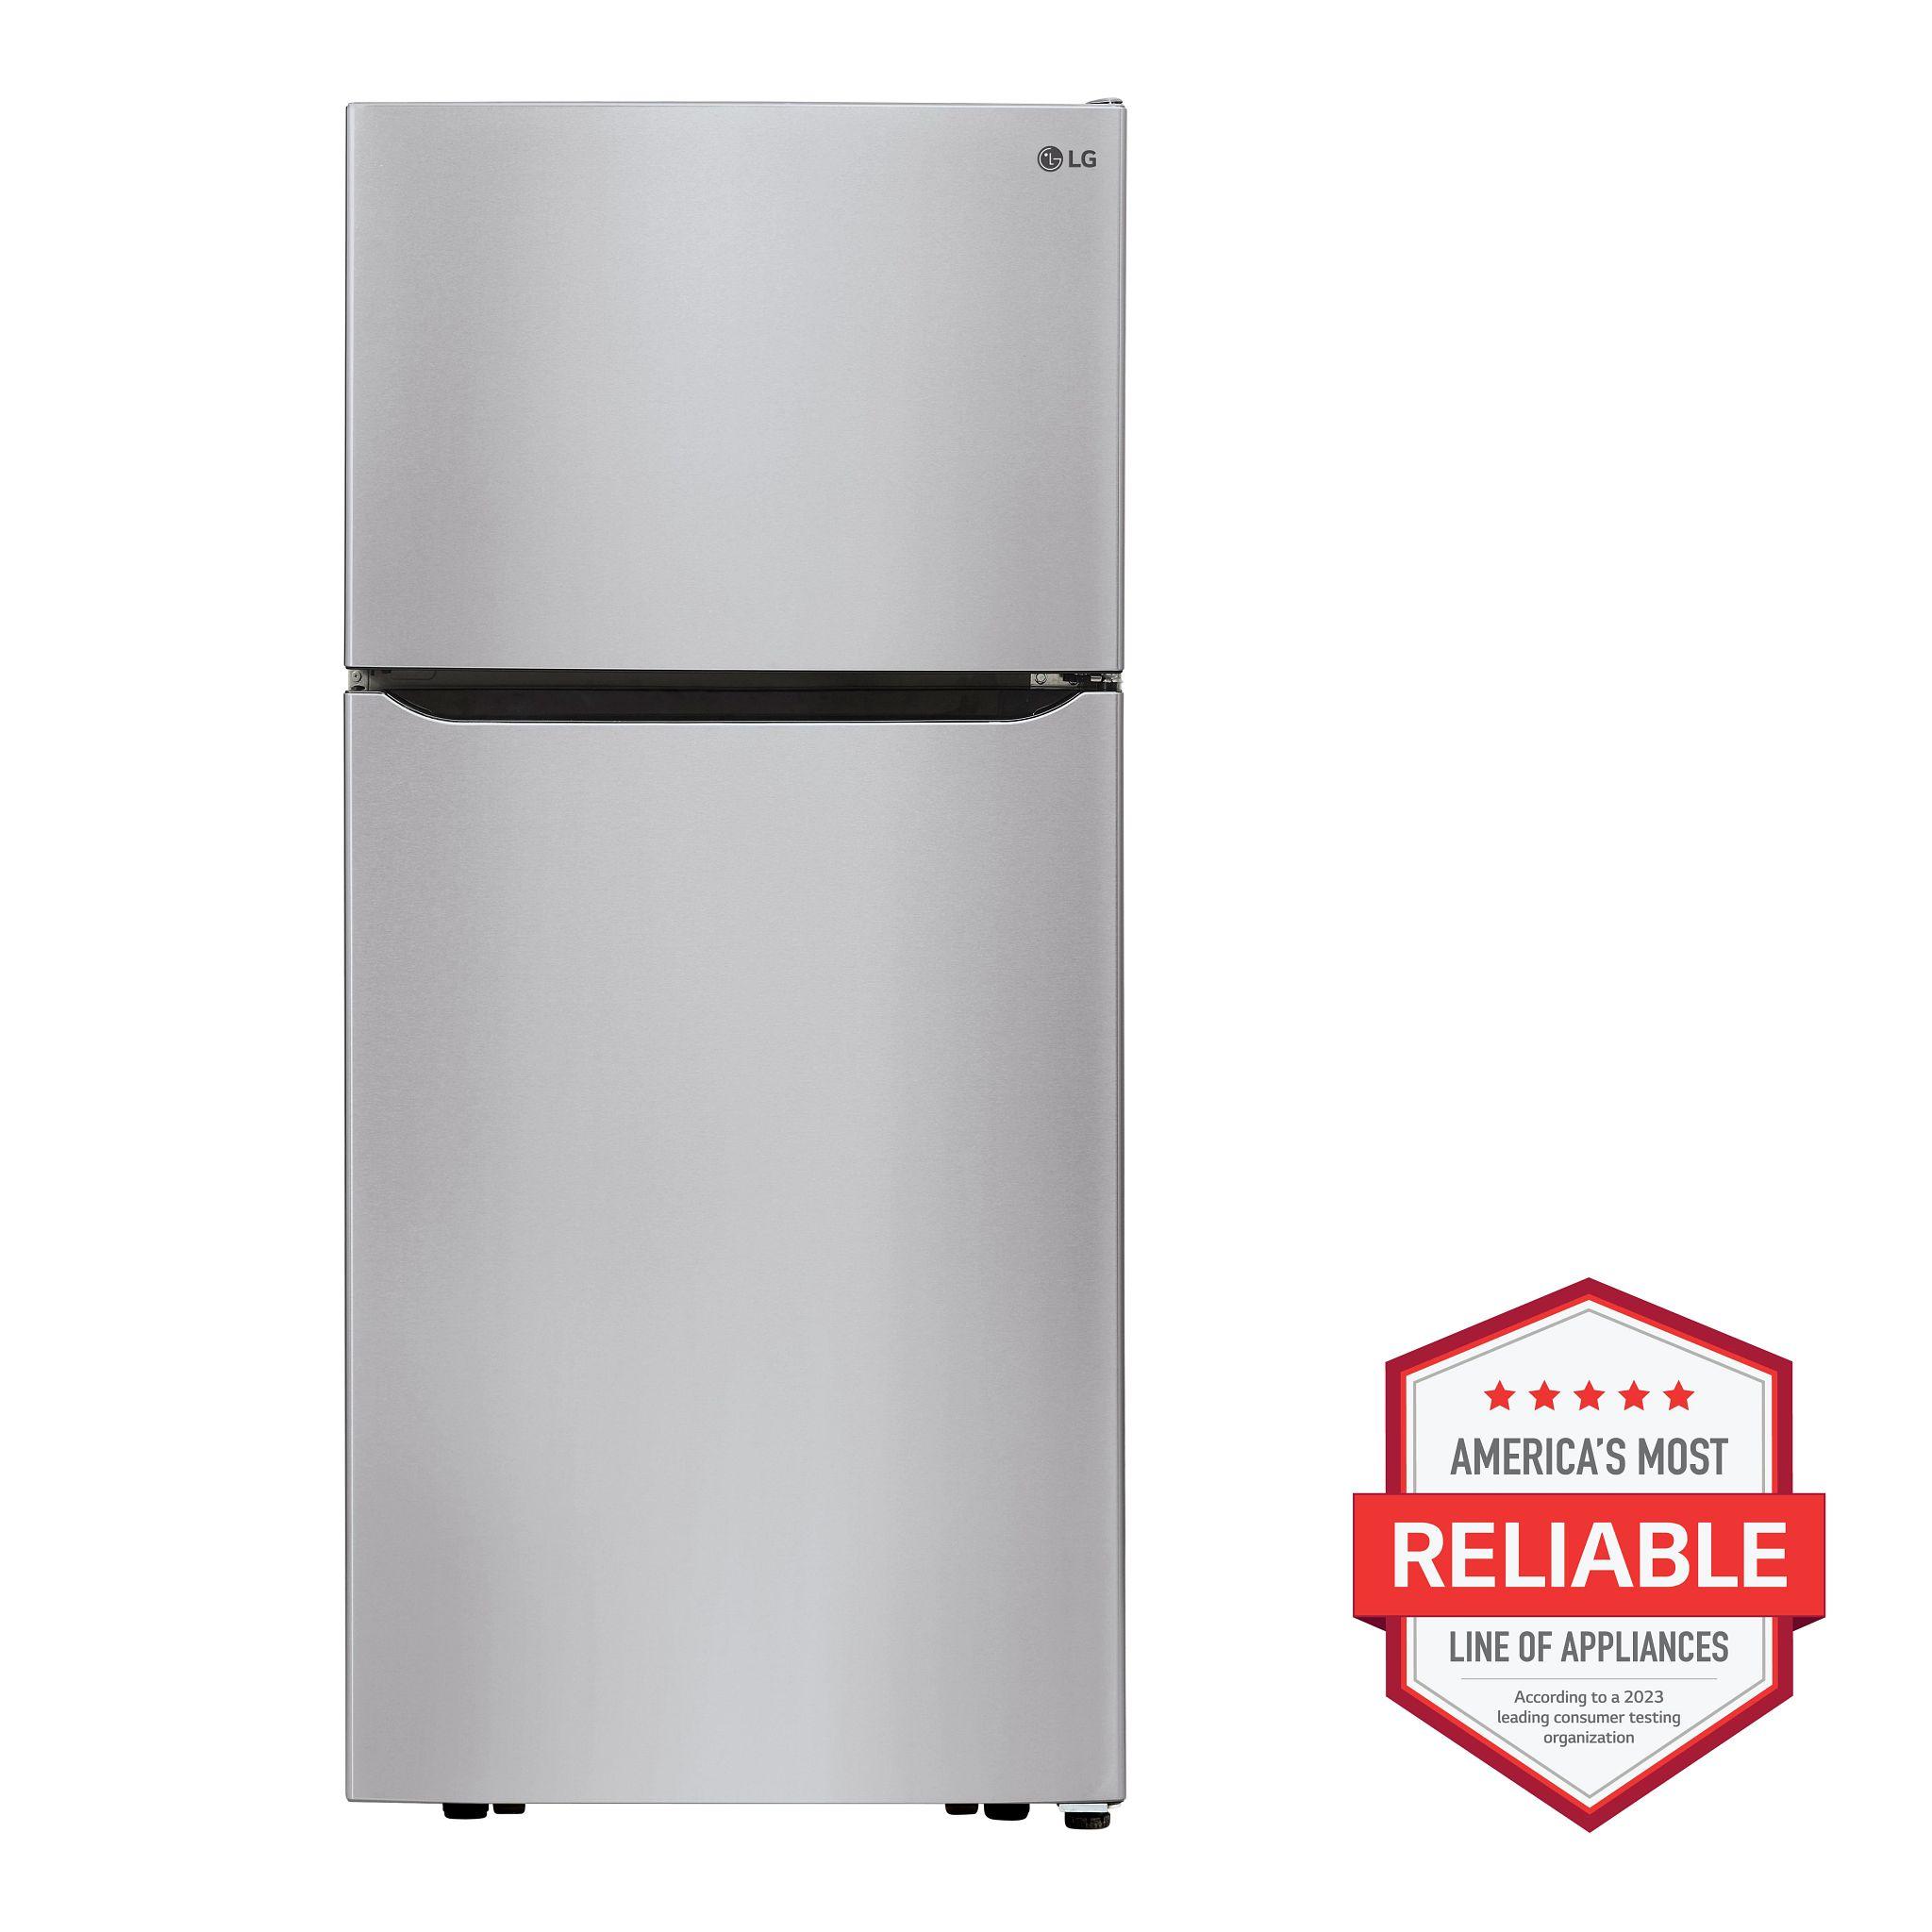 LG Appliances LG LTCS20030S 20 cu. ft. Top Freezer Refrigerator